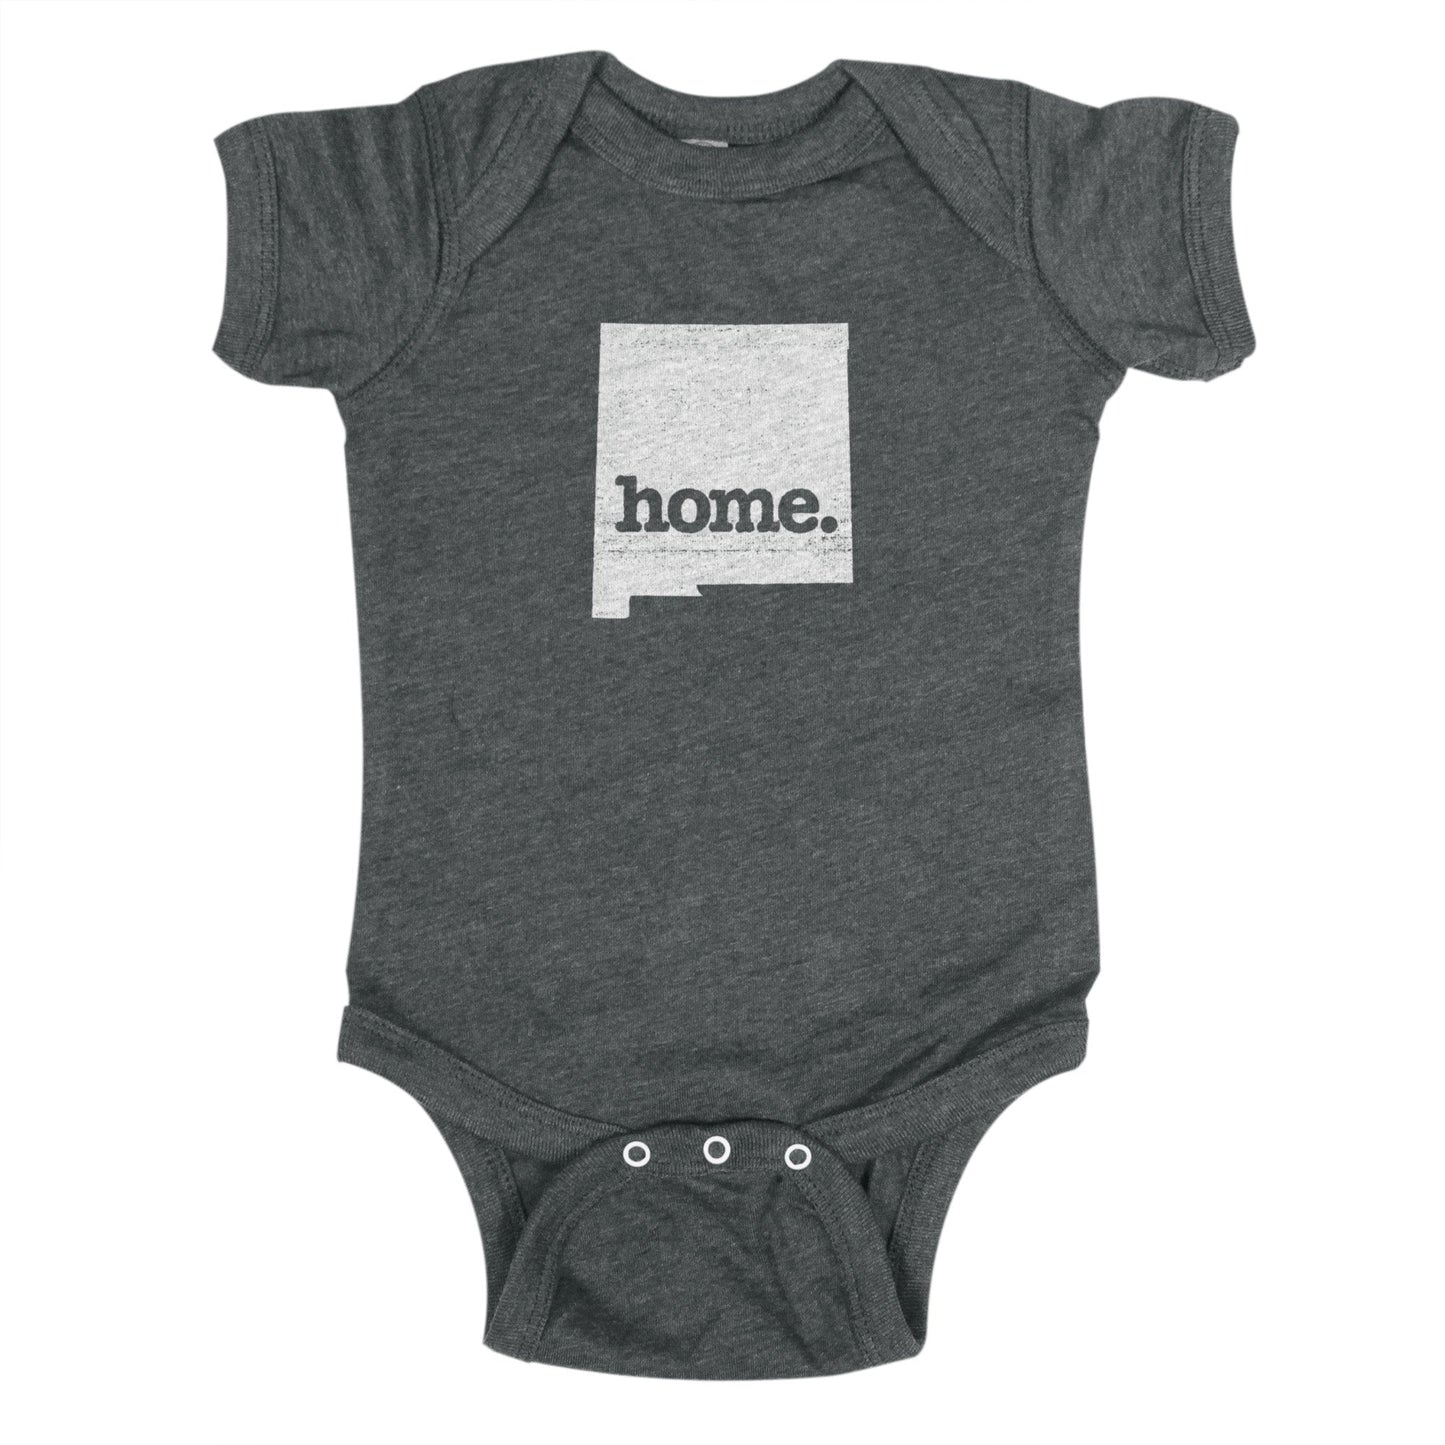 home. Baby Bodysuit - New Mexico